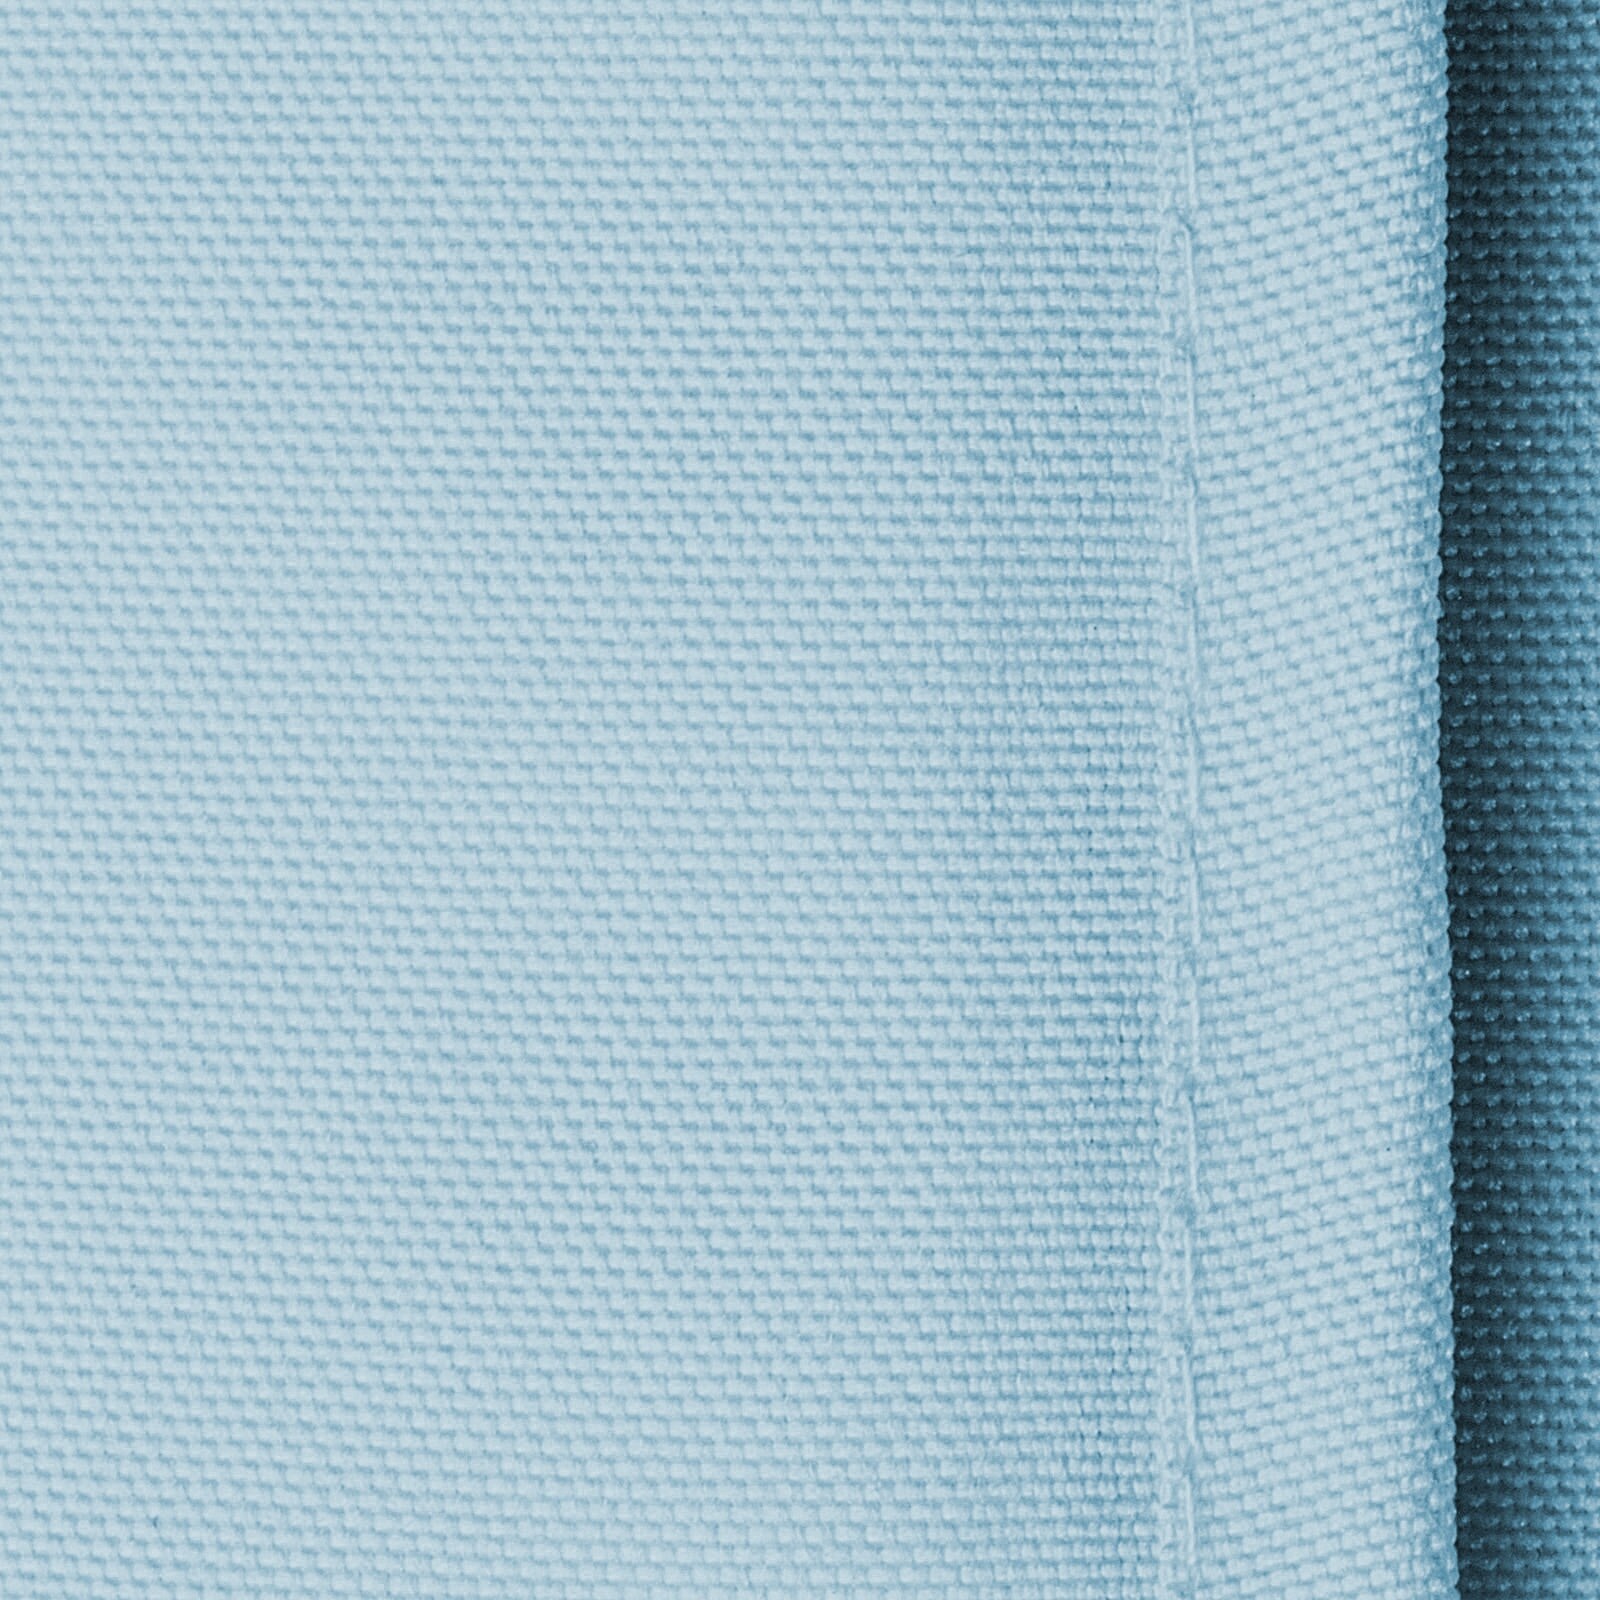 Lann's Linens - 1 Dozen 20 Oversized Cloth Dinner Table Napkins - Machine Washable Restaurant/Wedding/Hotel Quality Polyester Fabric - Baby Blue